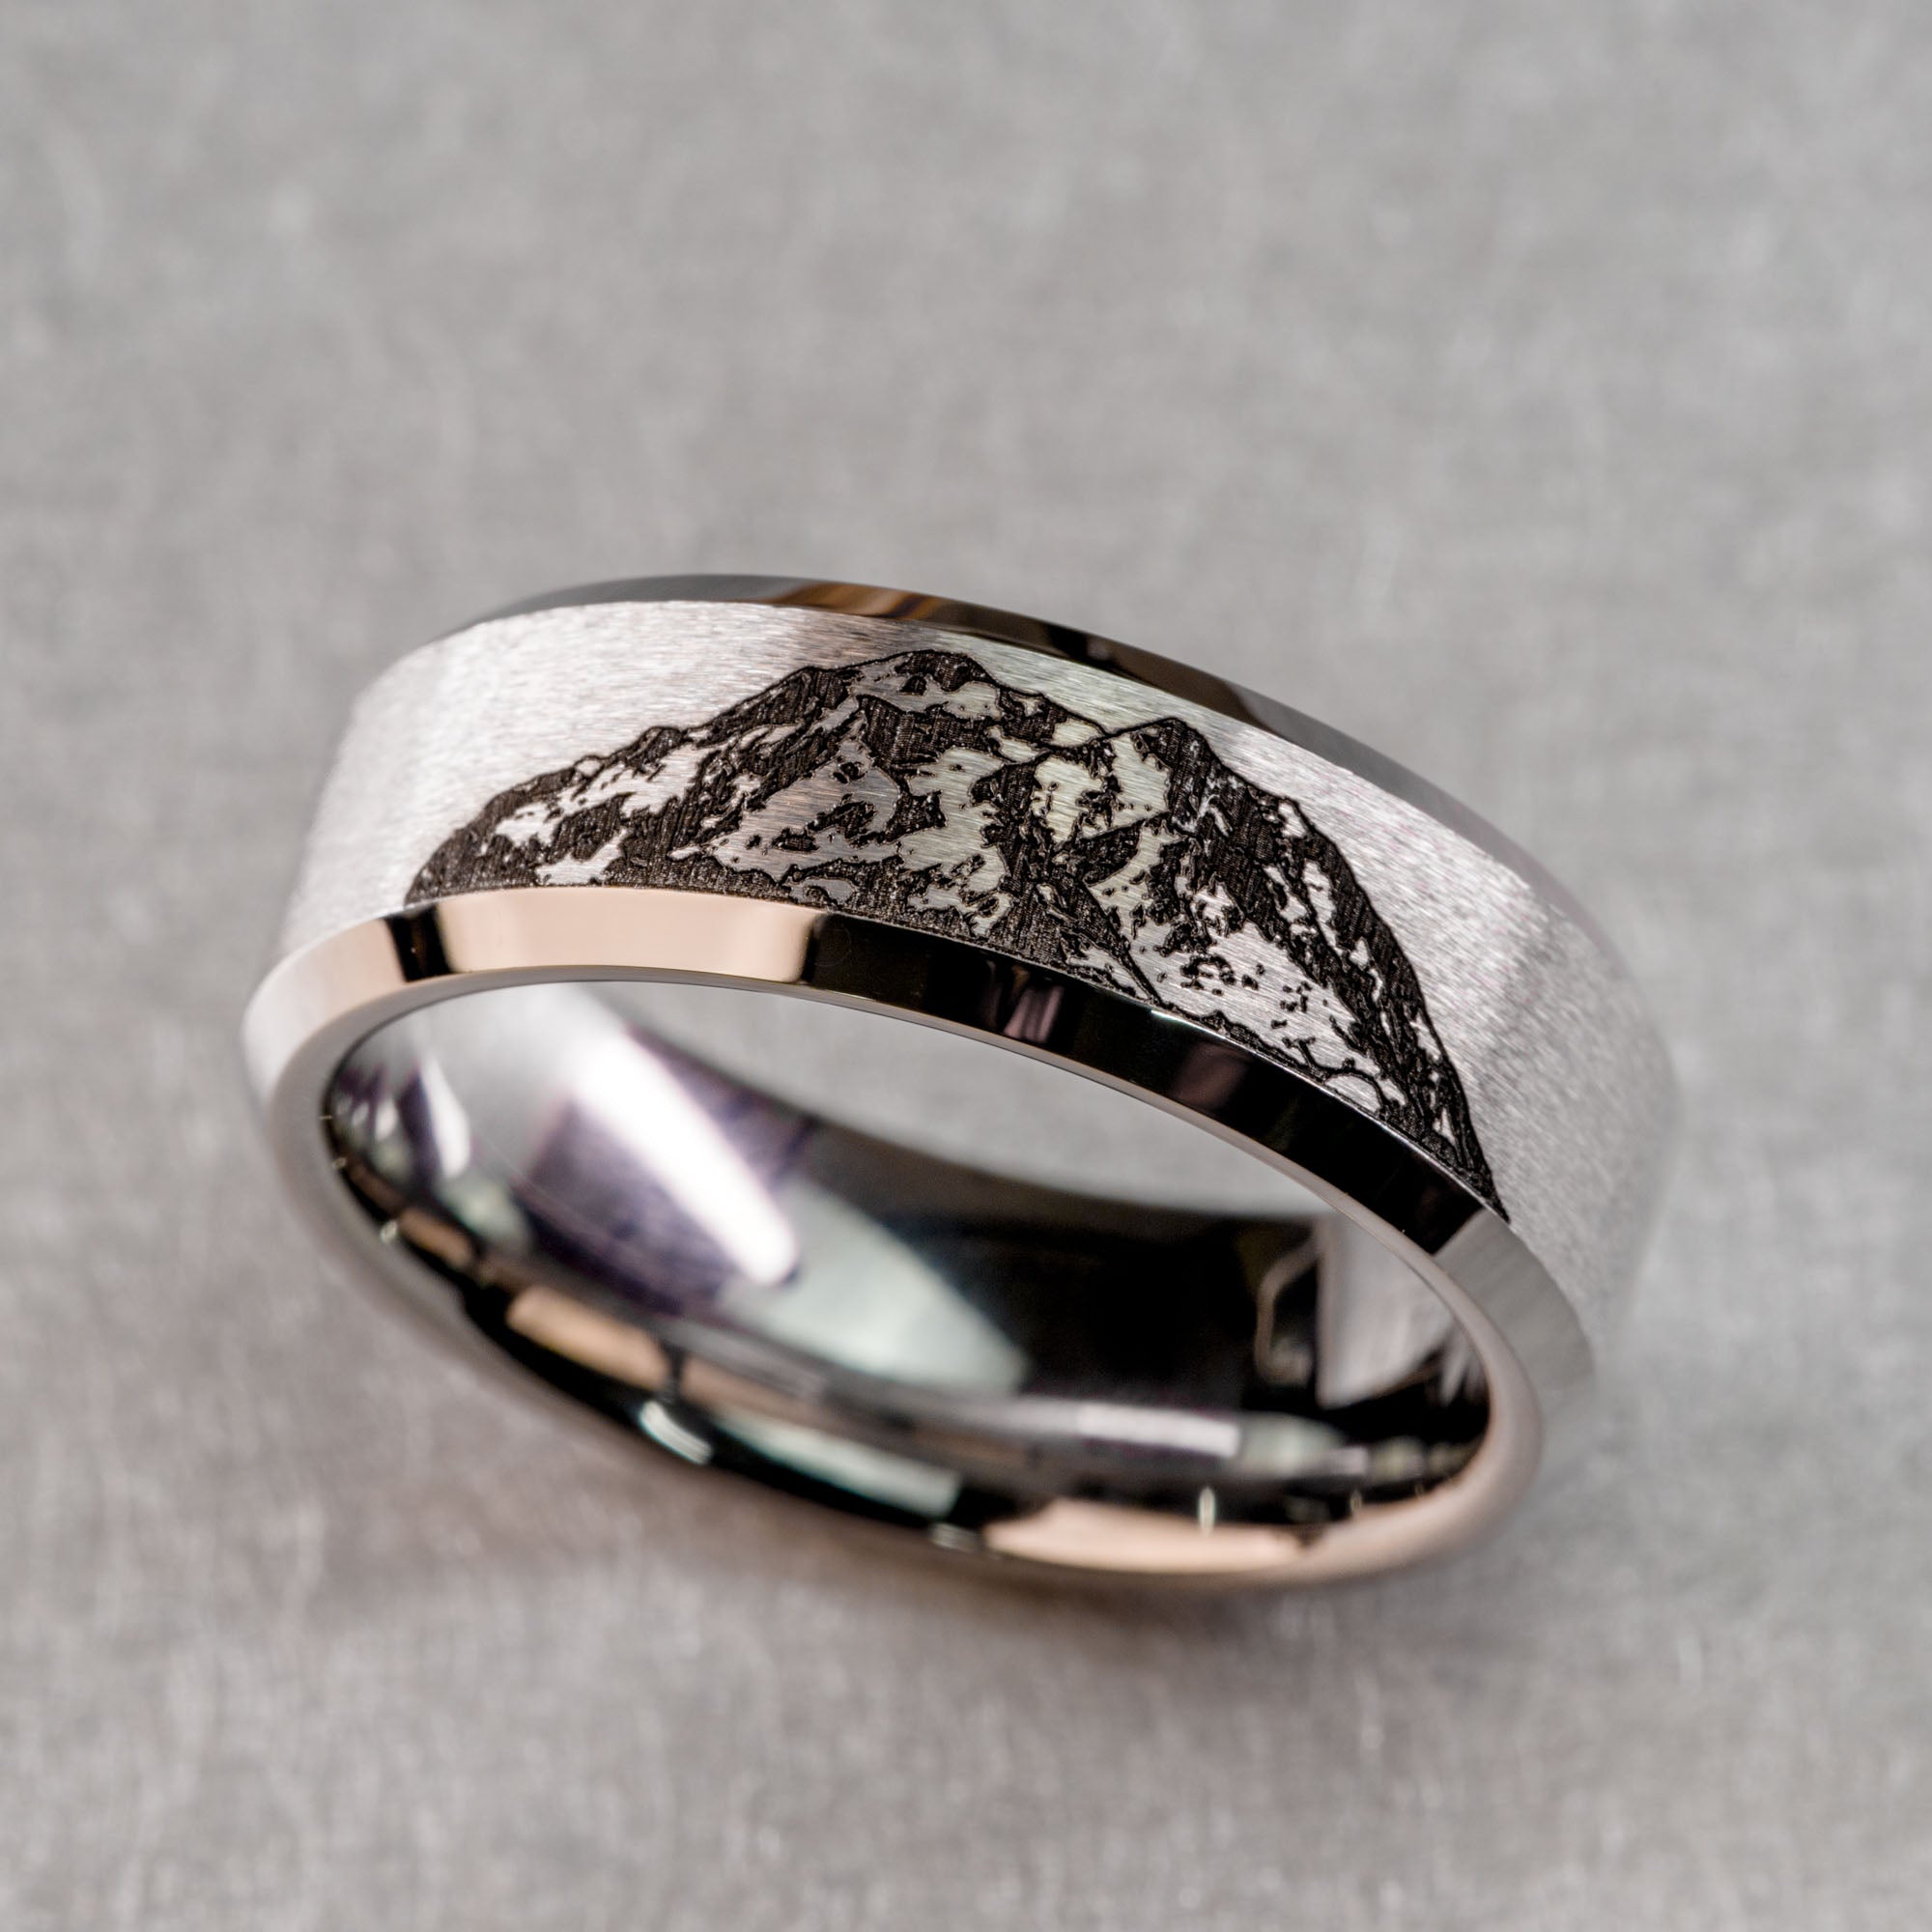 Beveled Tungsten Engraved Denali Alaska Ring